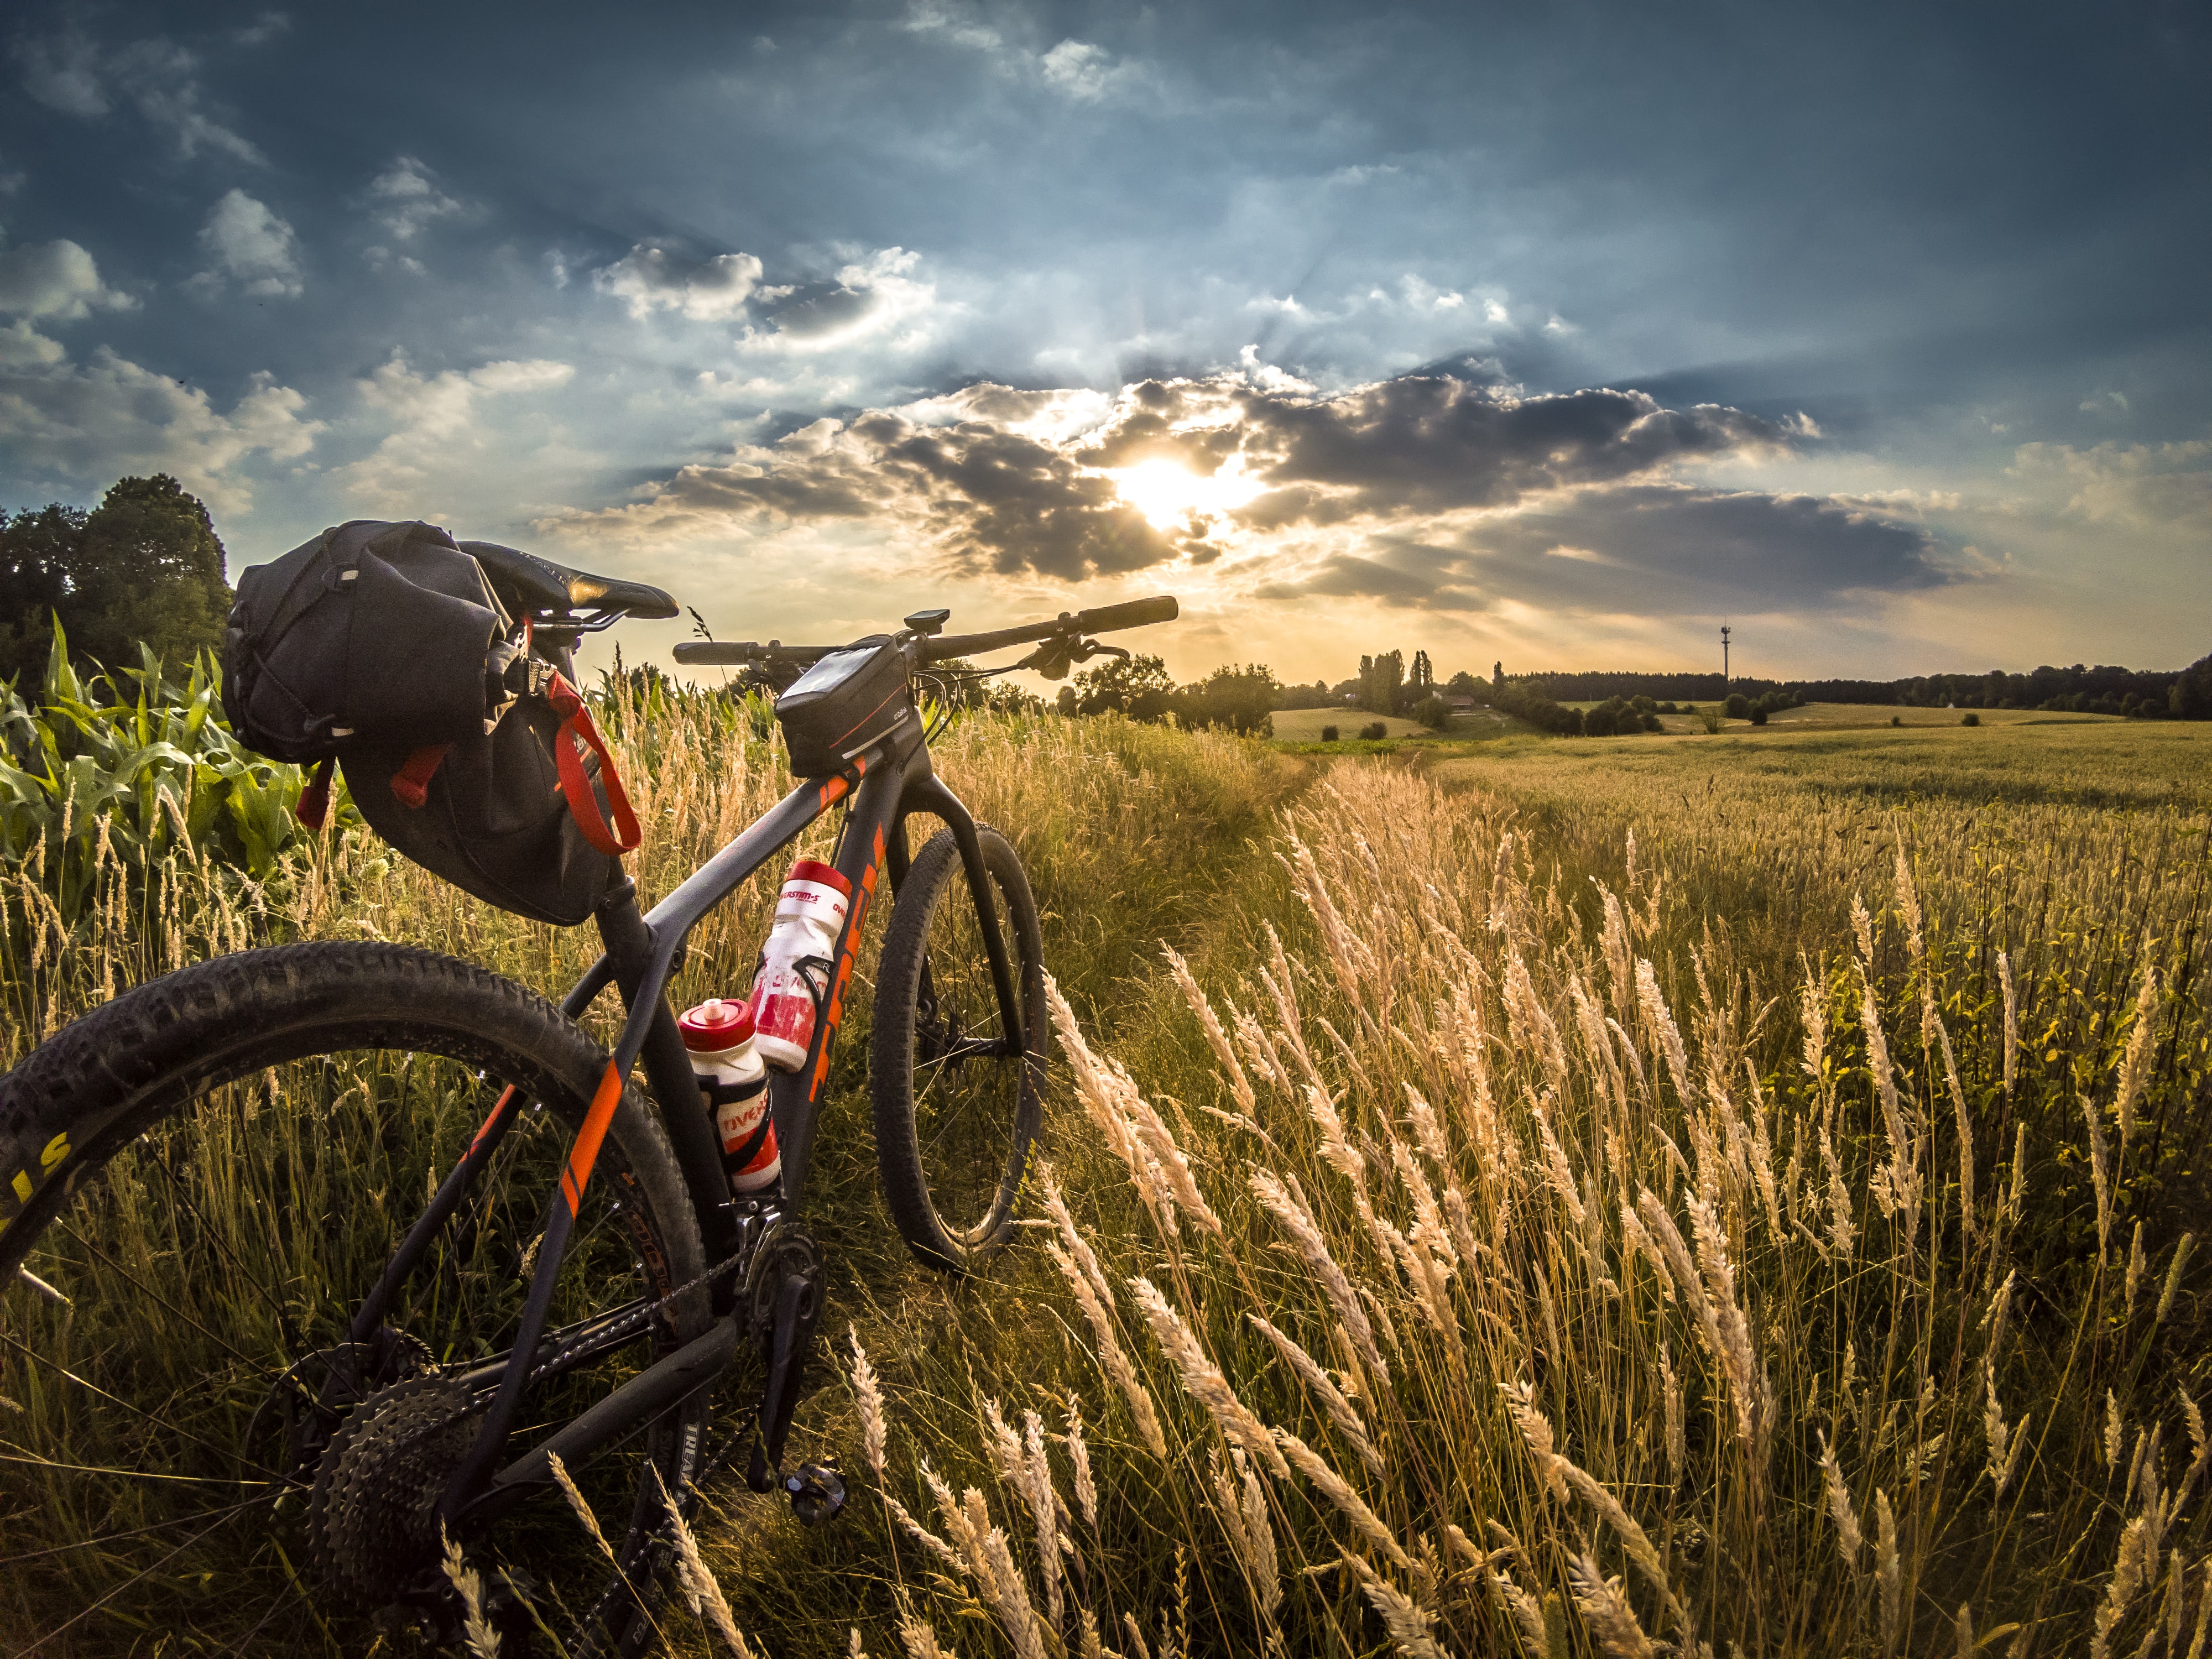 A black mountain bike parked along a golden field.